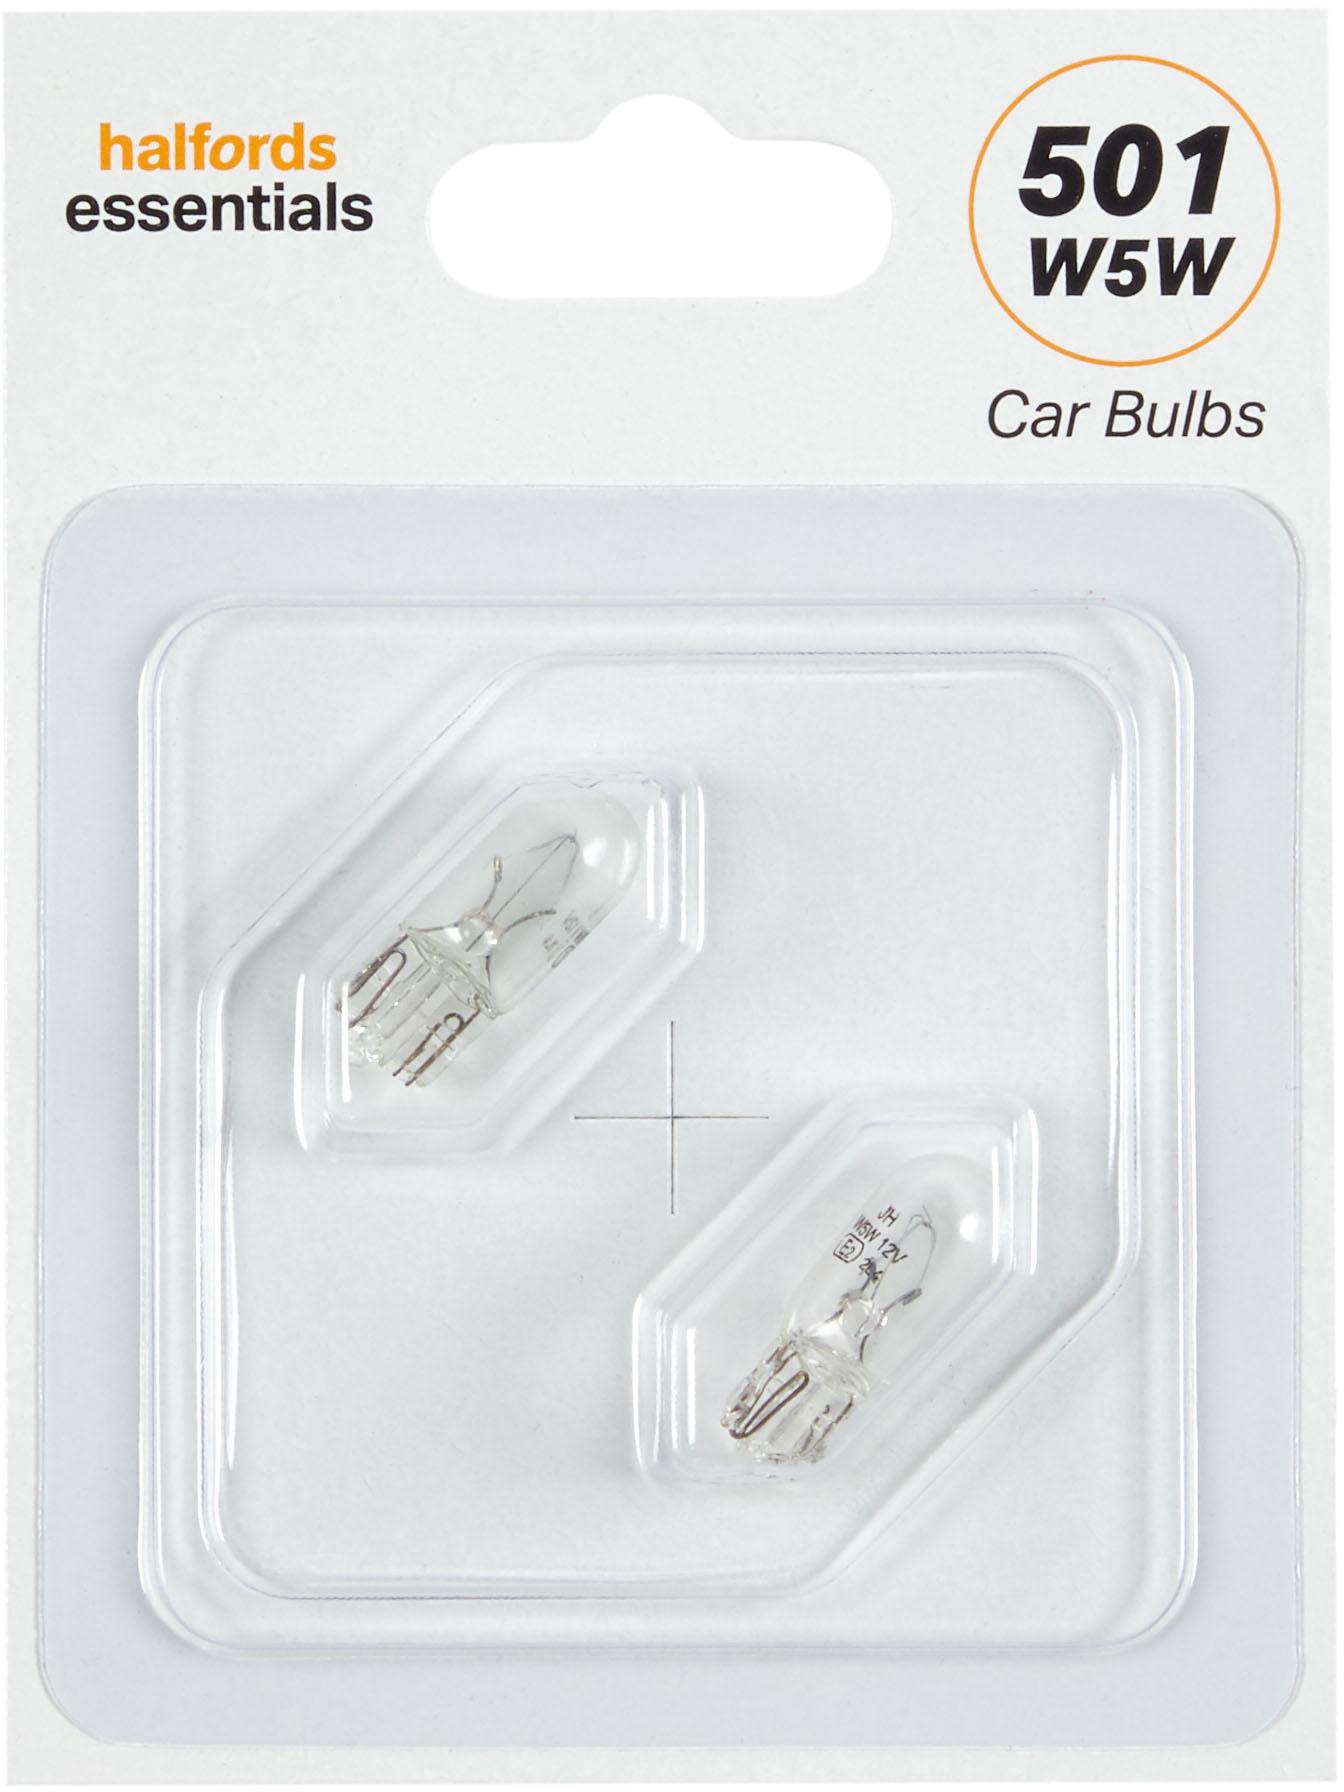 501 W5W Bulbs Halfords Essentials Twin Pack